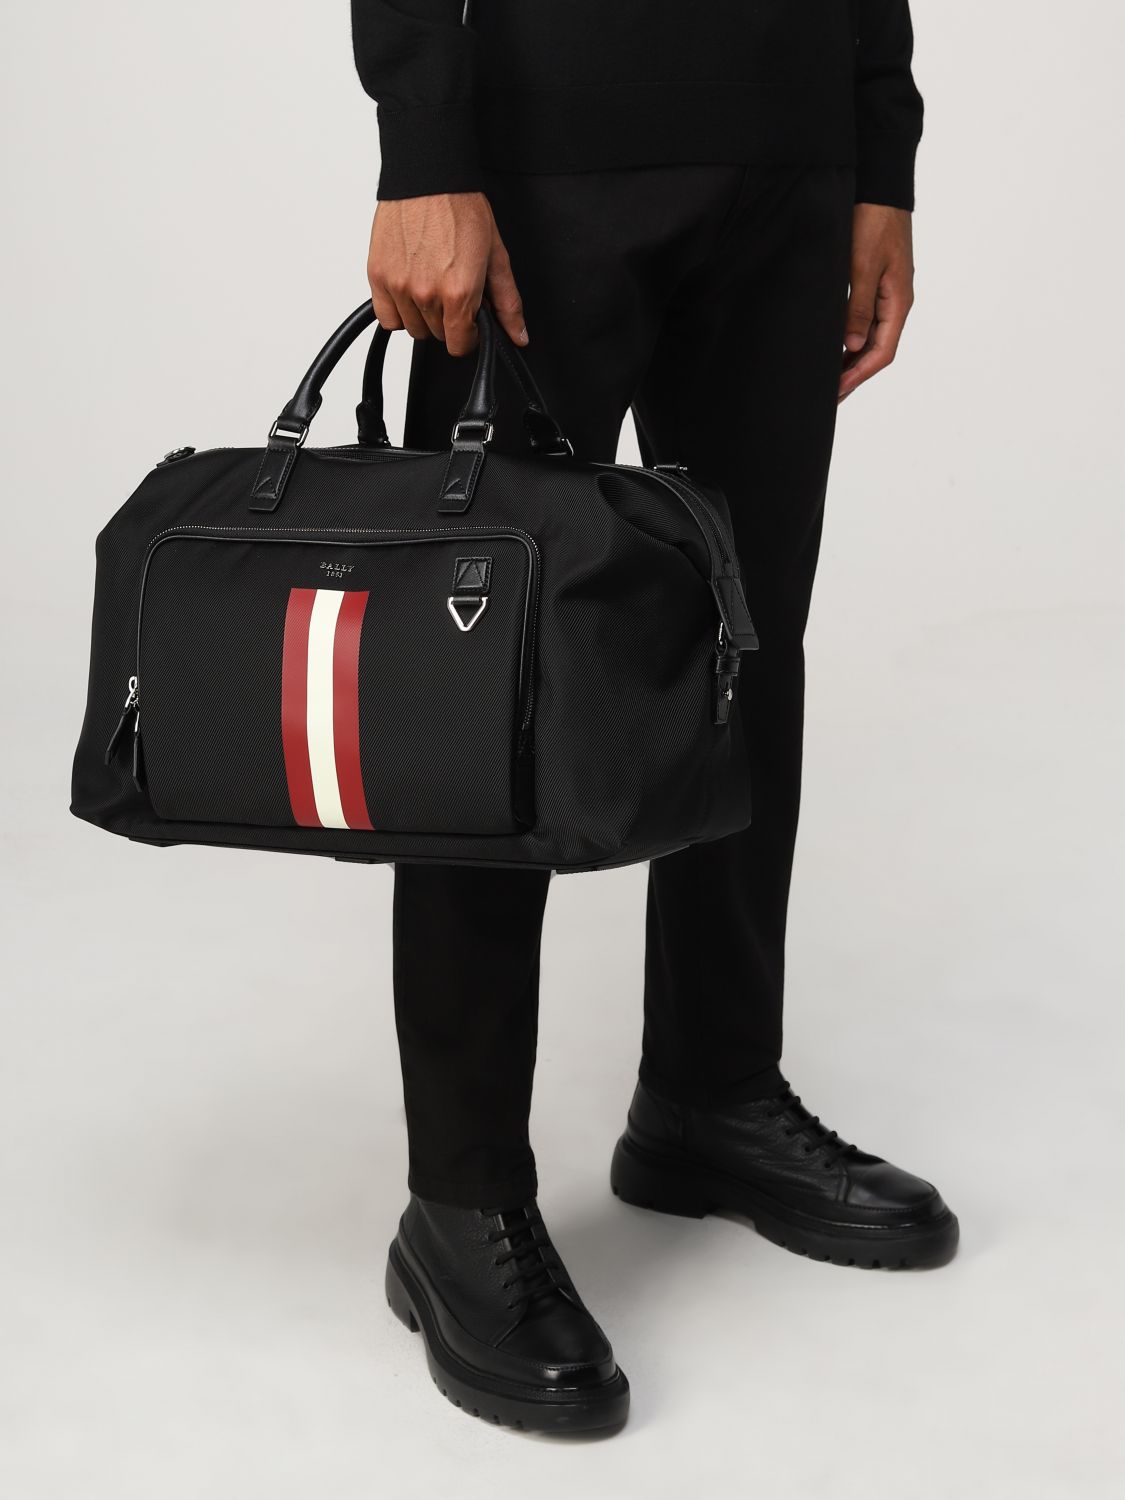 Travel bag Bally: Bally travel bag for man black 2